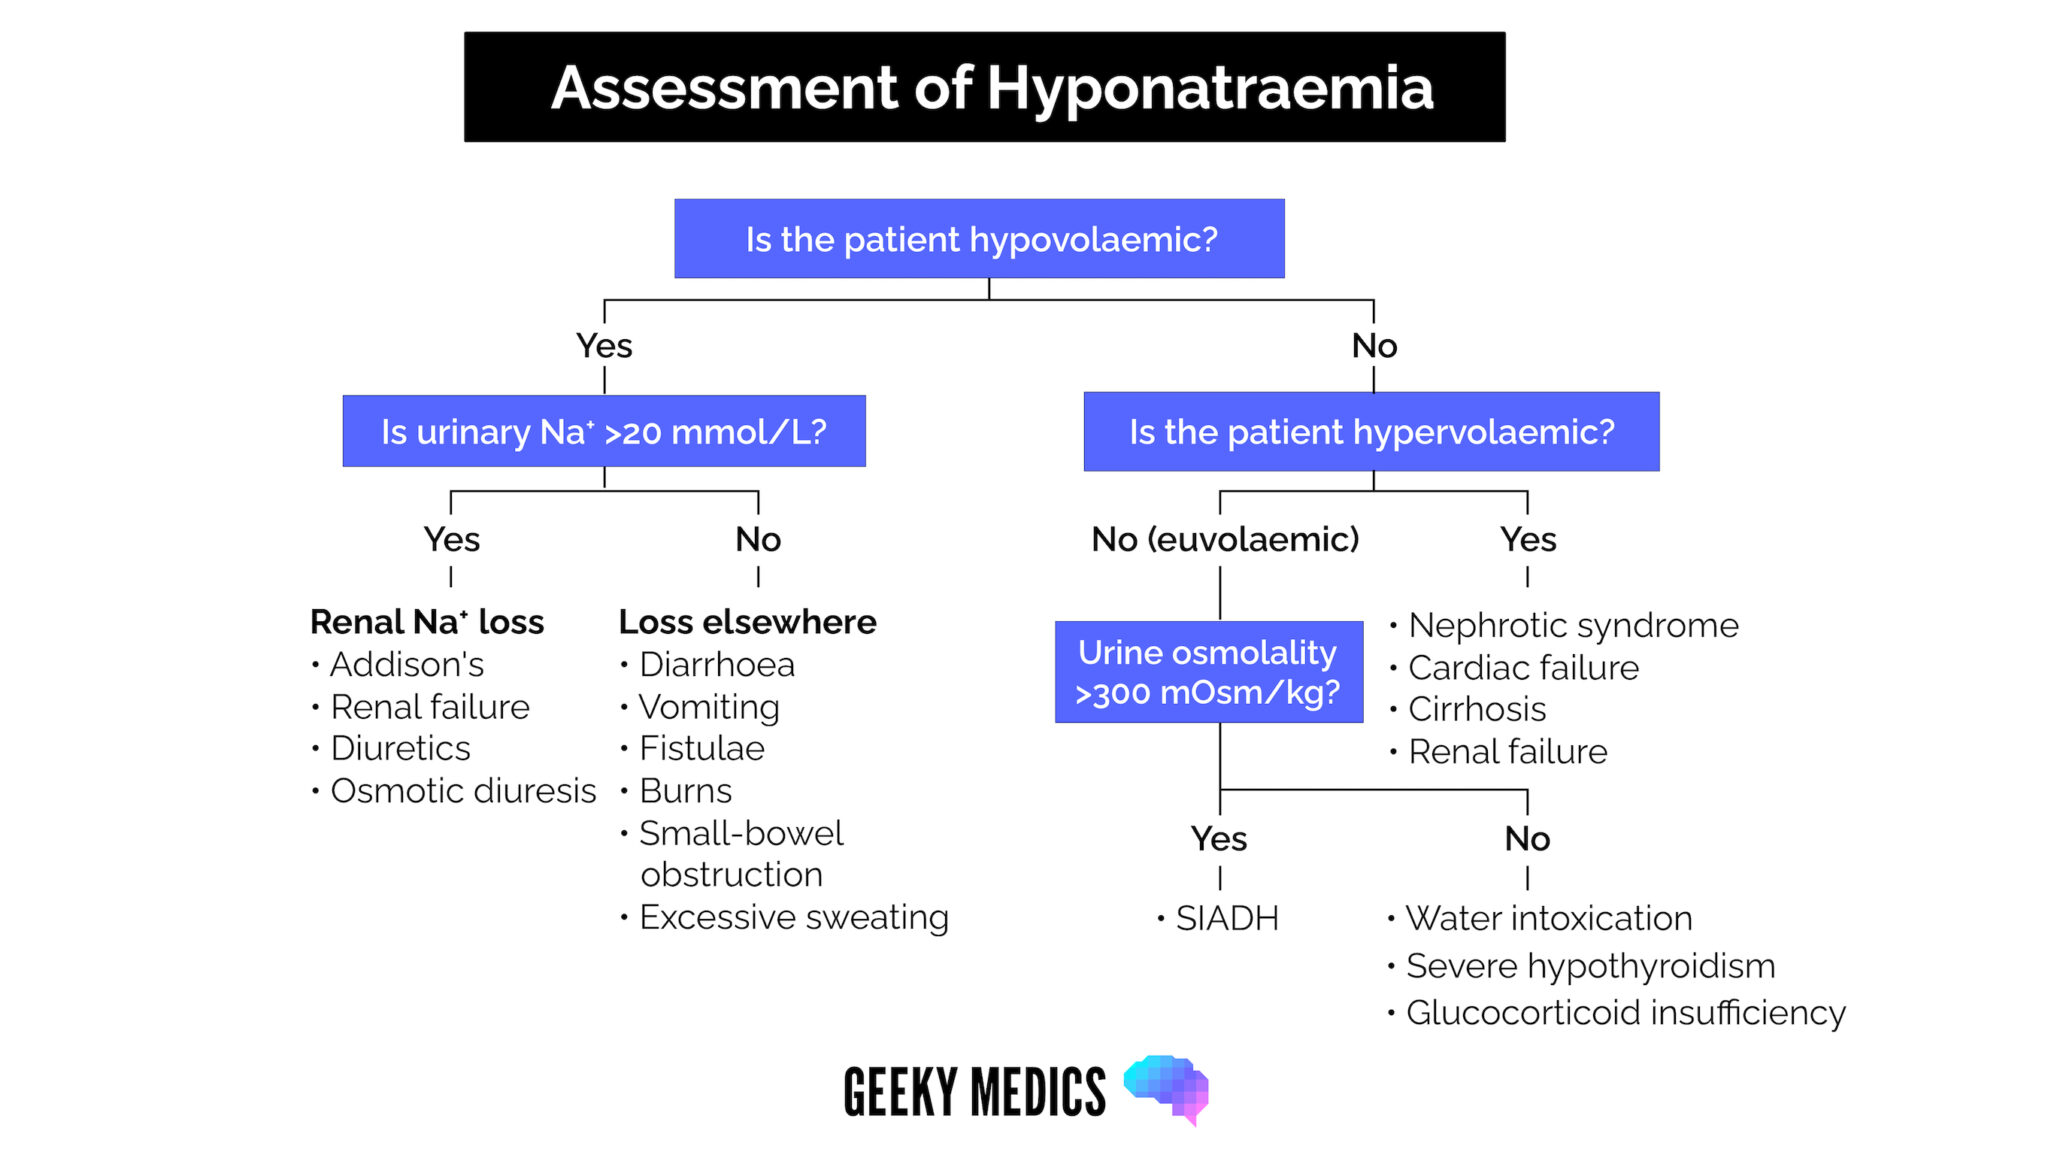 Assessment of hyponatraemia flowchart